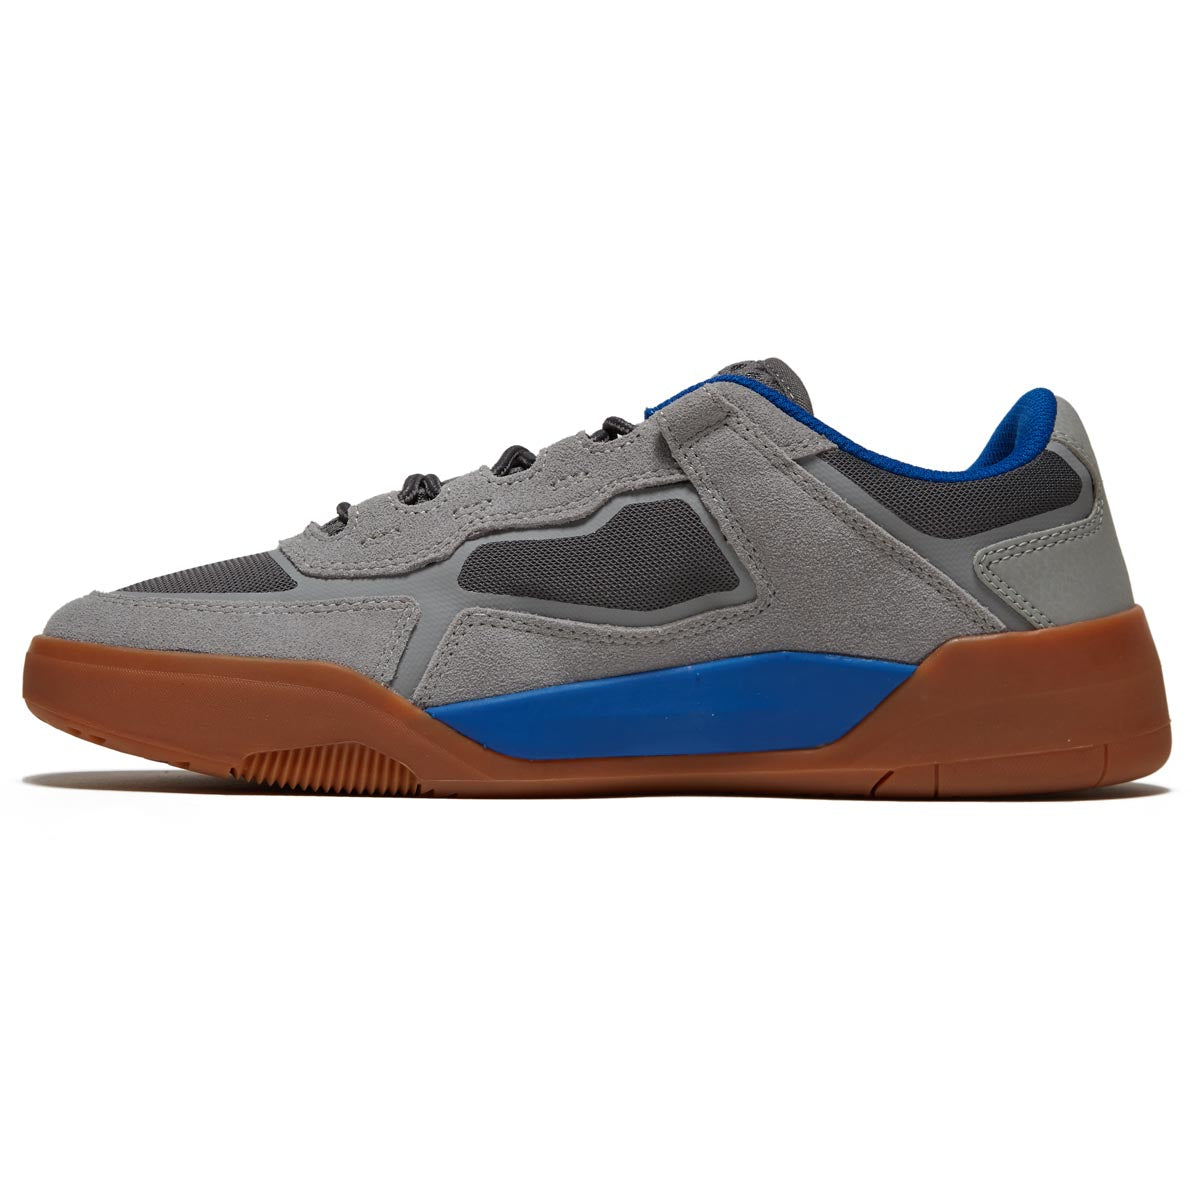 DC Metric S Shoes - Grey/Gum image 2